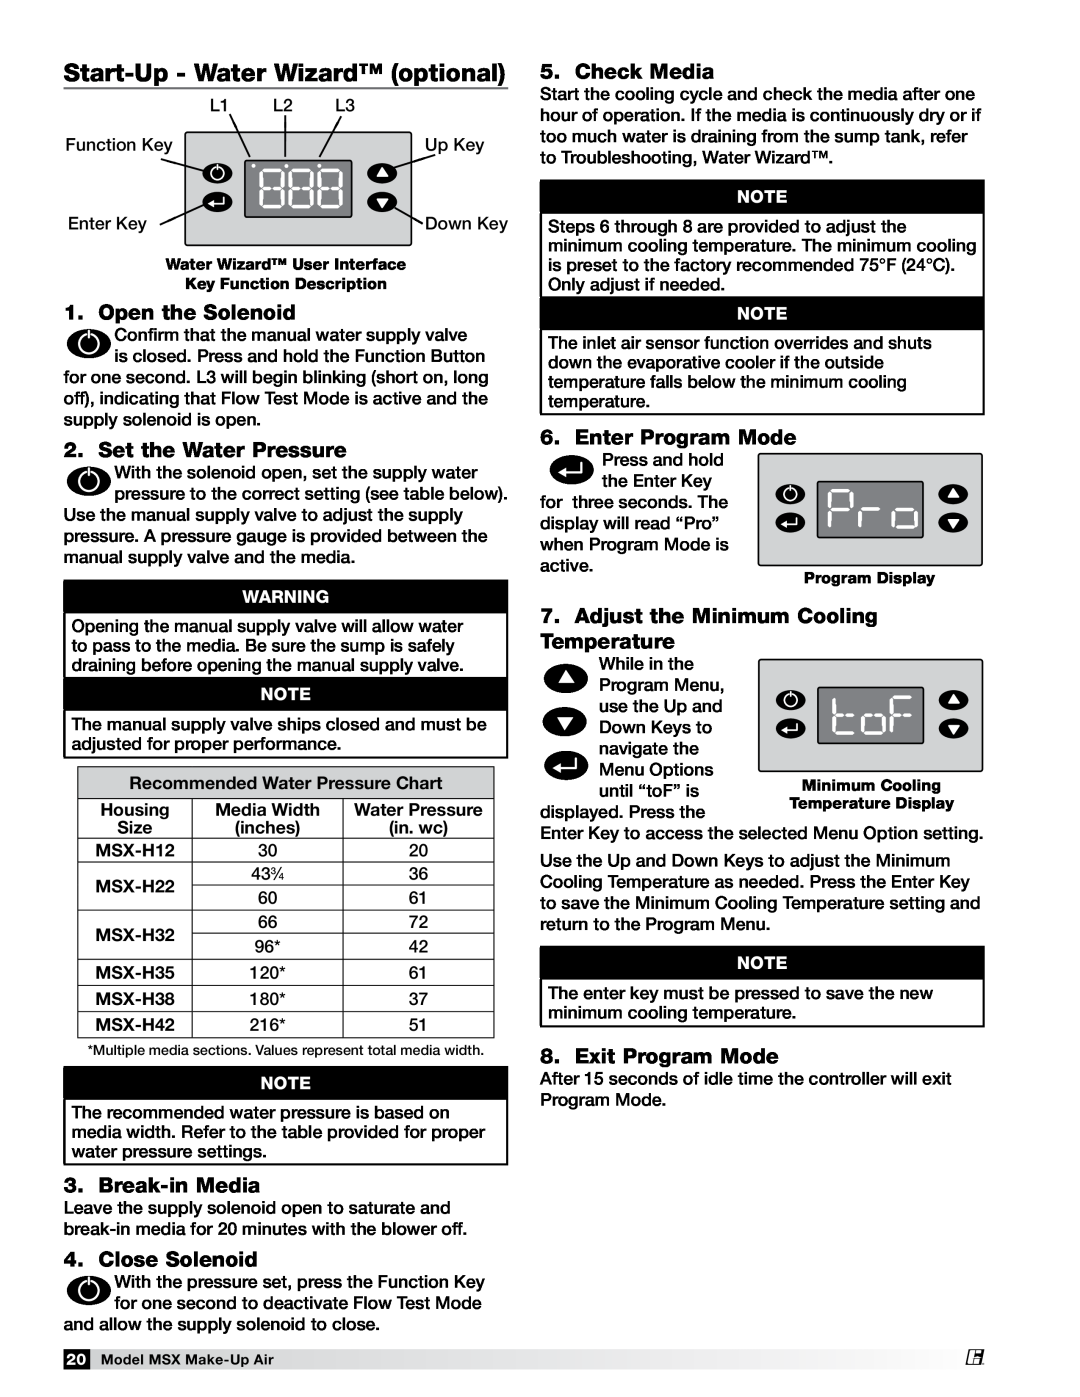 Greenheck Fan 470658 MSX manual Start-Up- Water Wizard optional, Open the Solenoid, Set the Water Pressure, Break-inMedia 